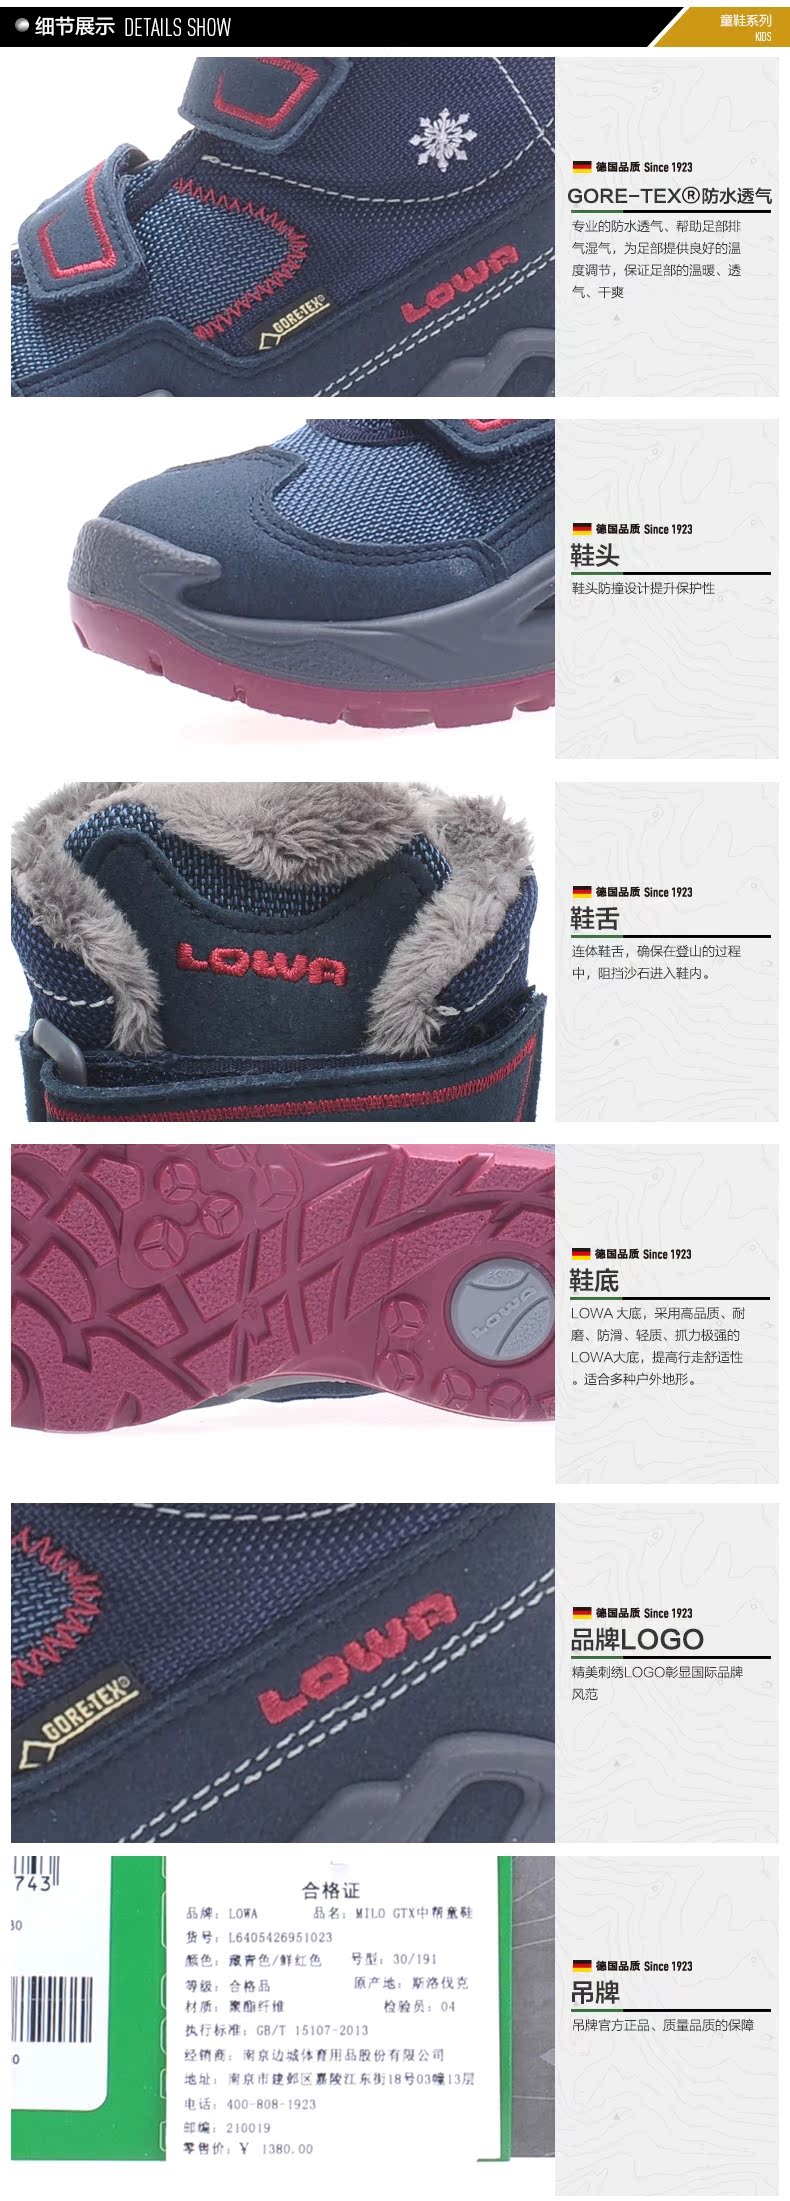 Chaussures de neige LOWA - Ref 1068742 Image 13